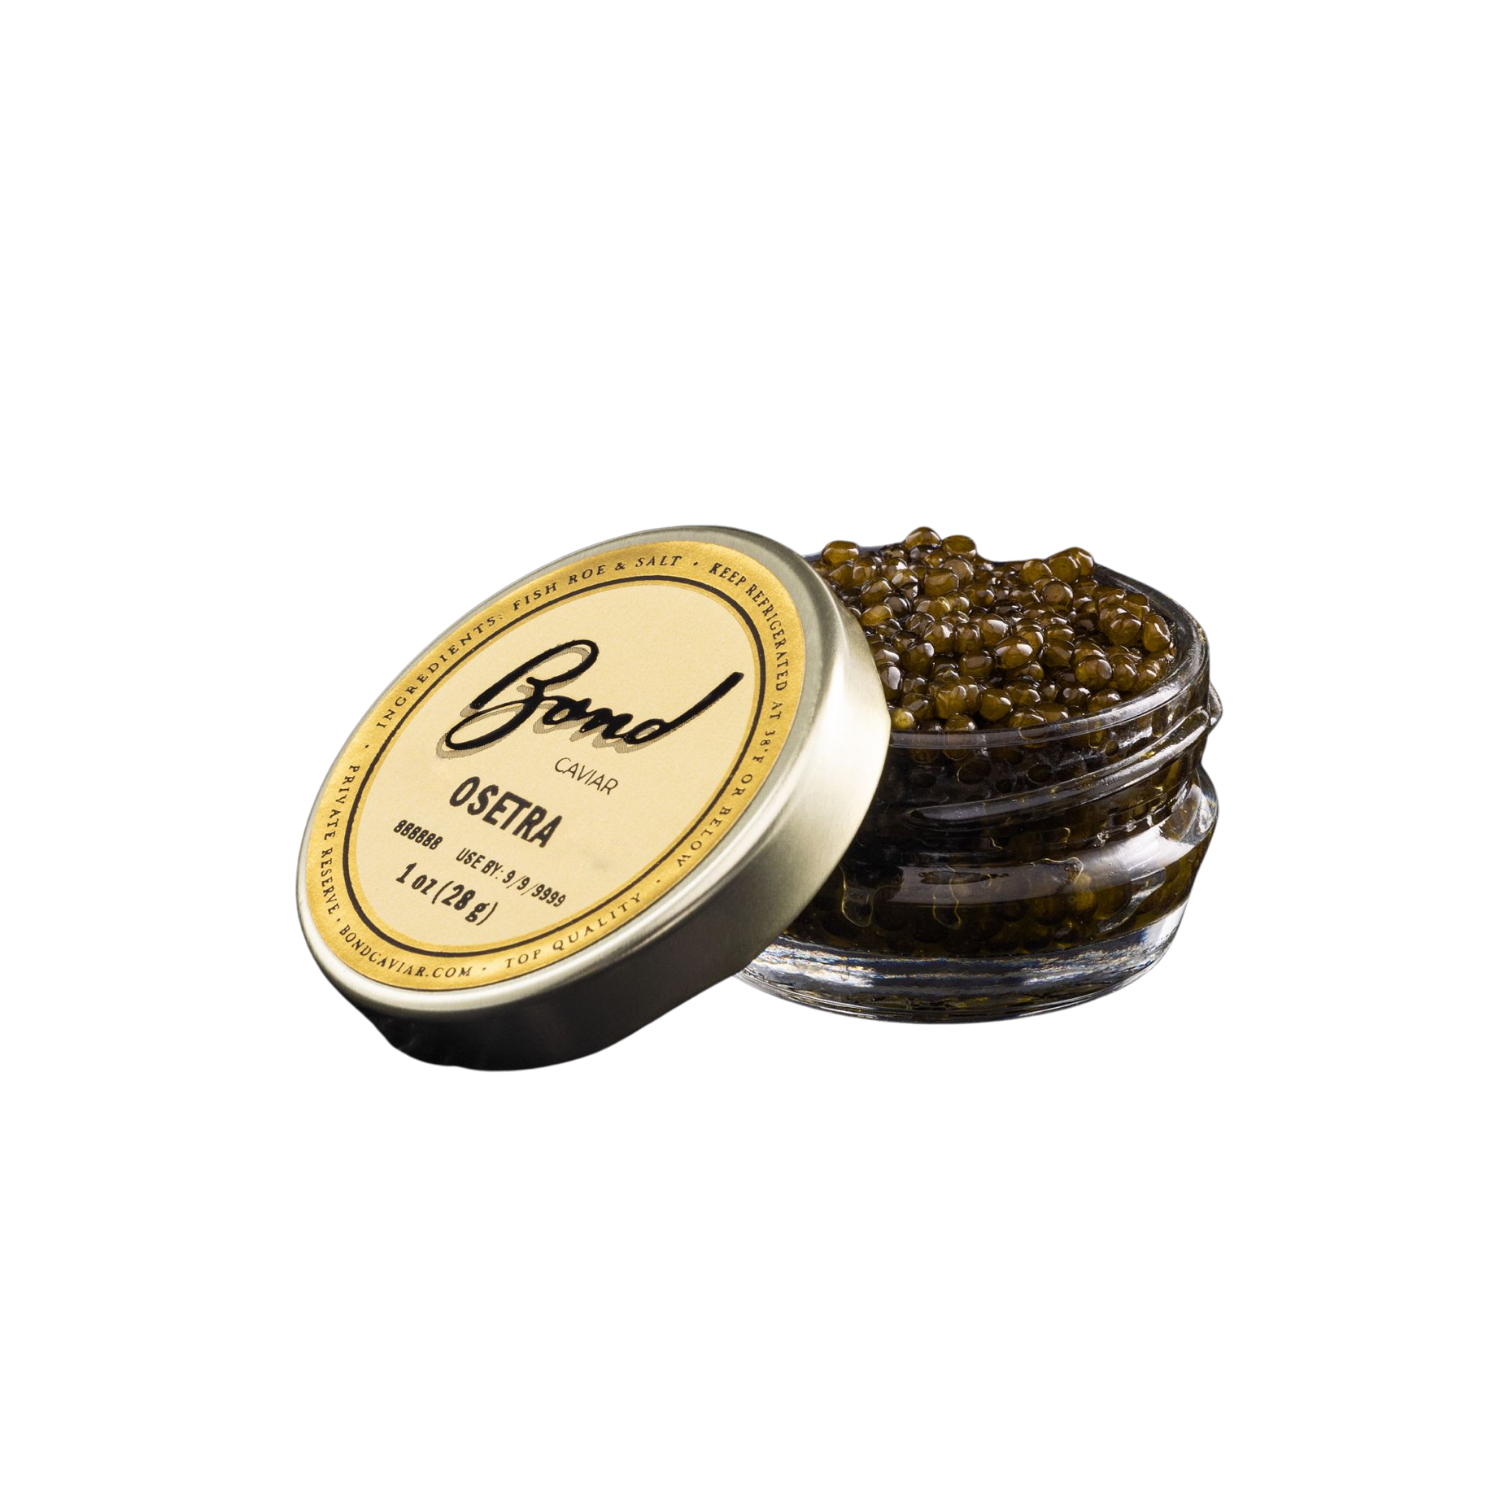 Oscietra Caviar - The Truffle Company